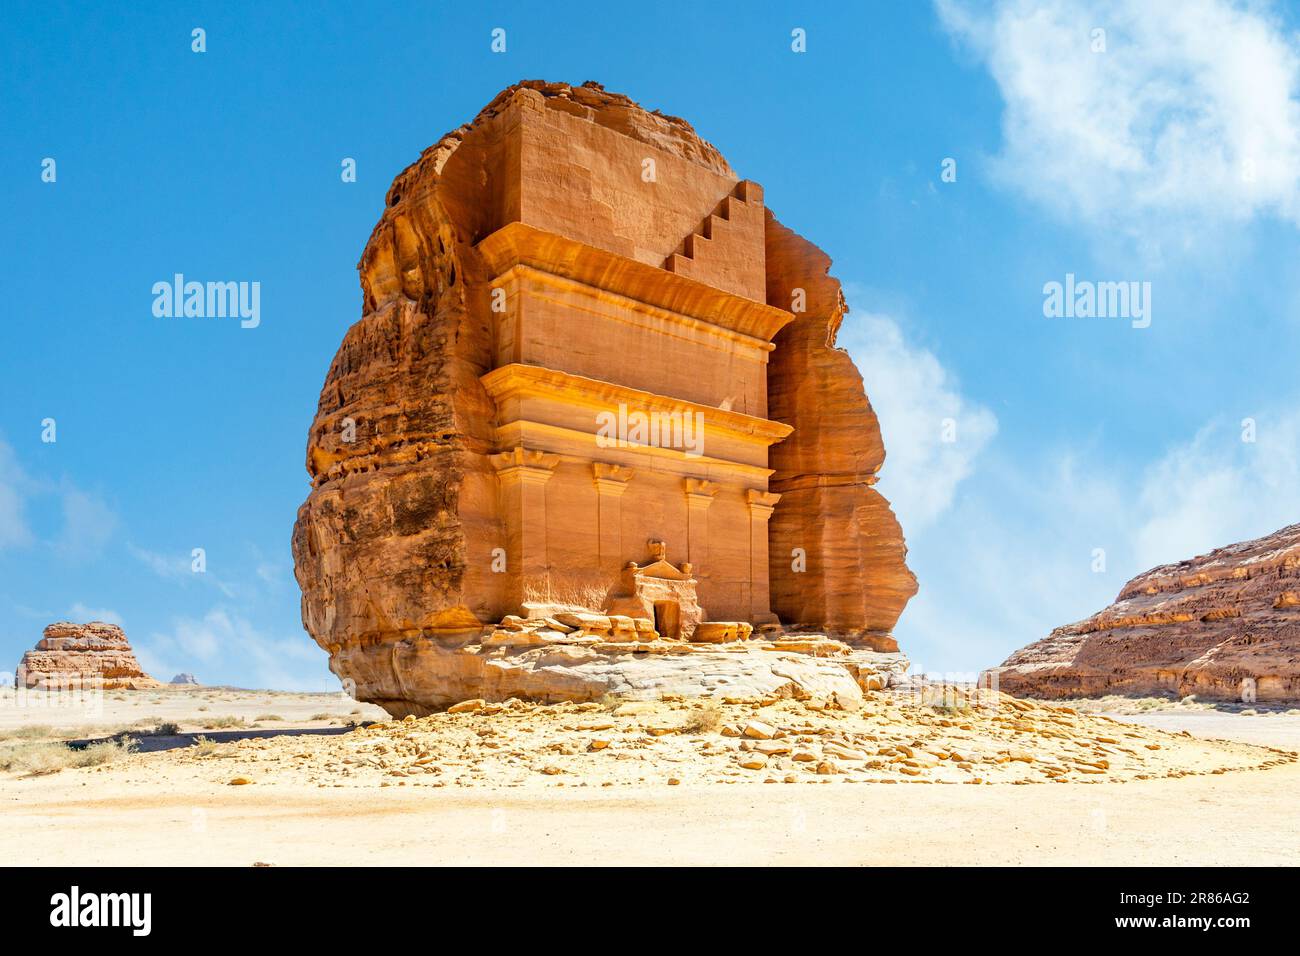 Entrance to the ancient nabataean Tomb of Lihyan, son of Kuza carved in rock in the desert,  Mada'in Salih, Hegra, Saudi Arabia Stock Photo